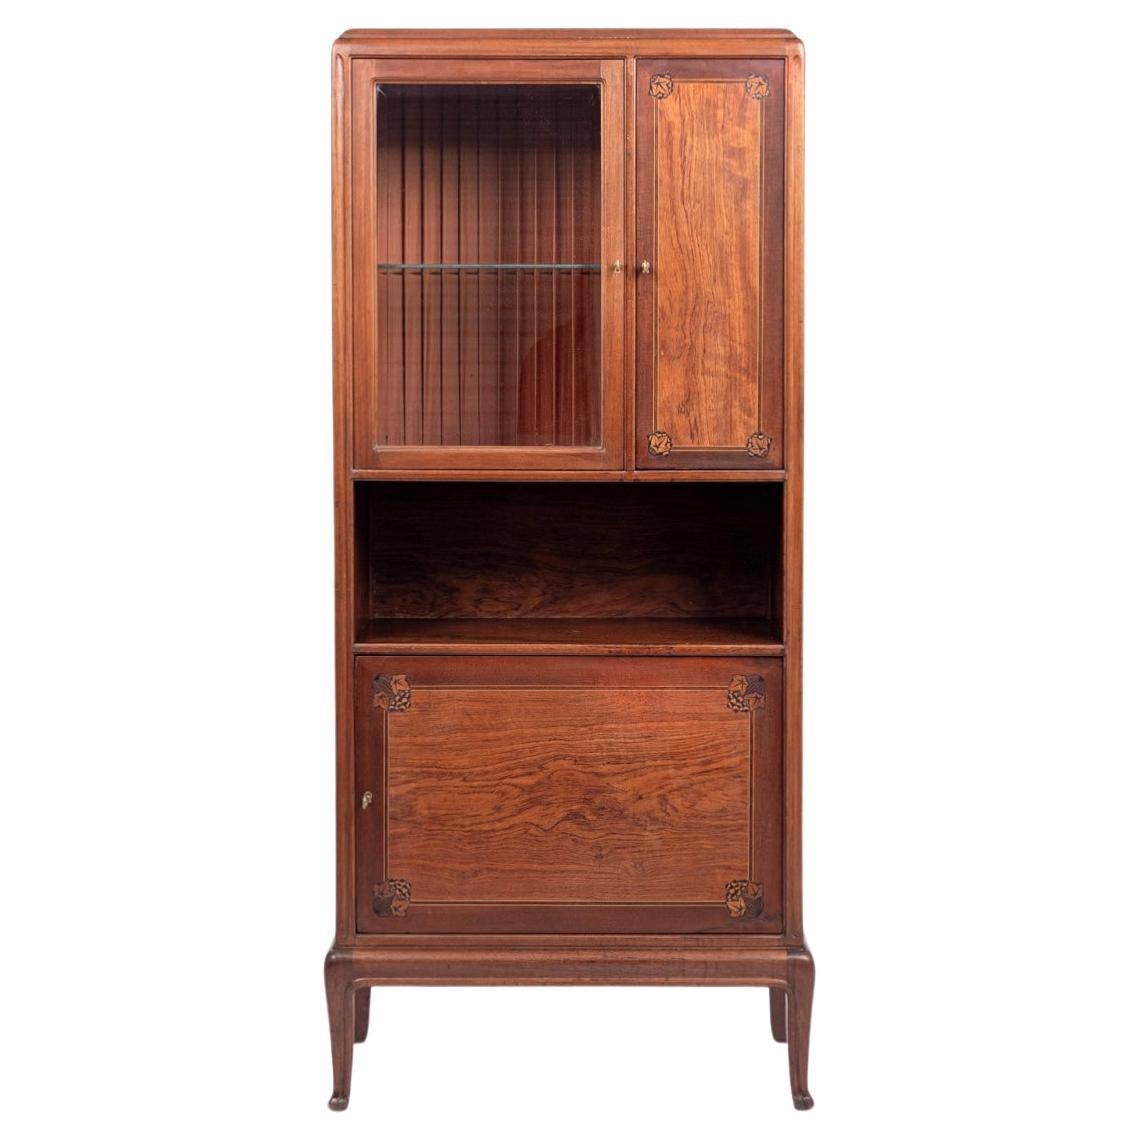 Antique Art Nouveau Inlaid Wooden Cabinet by Majorelle, France, Signed For Sale